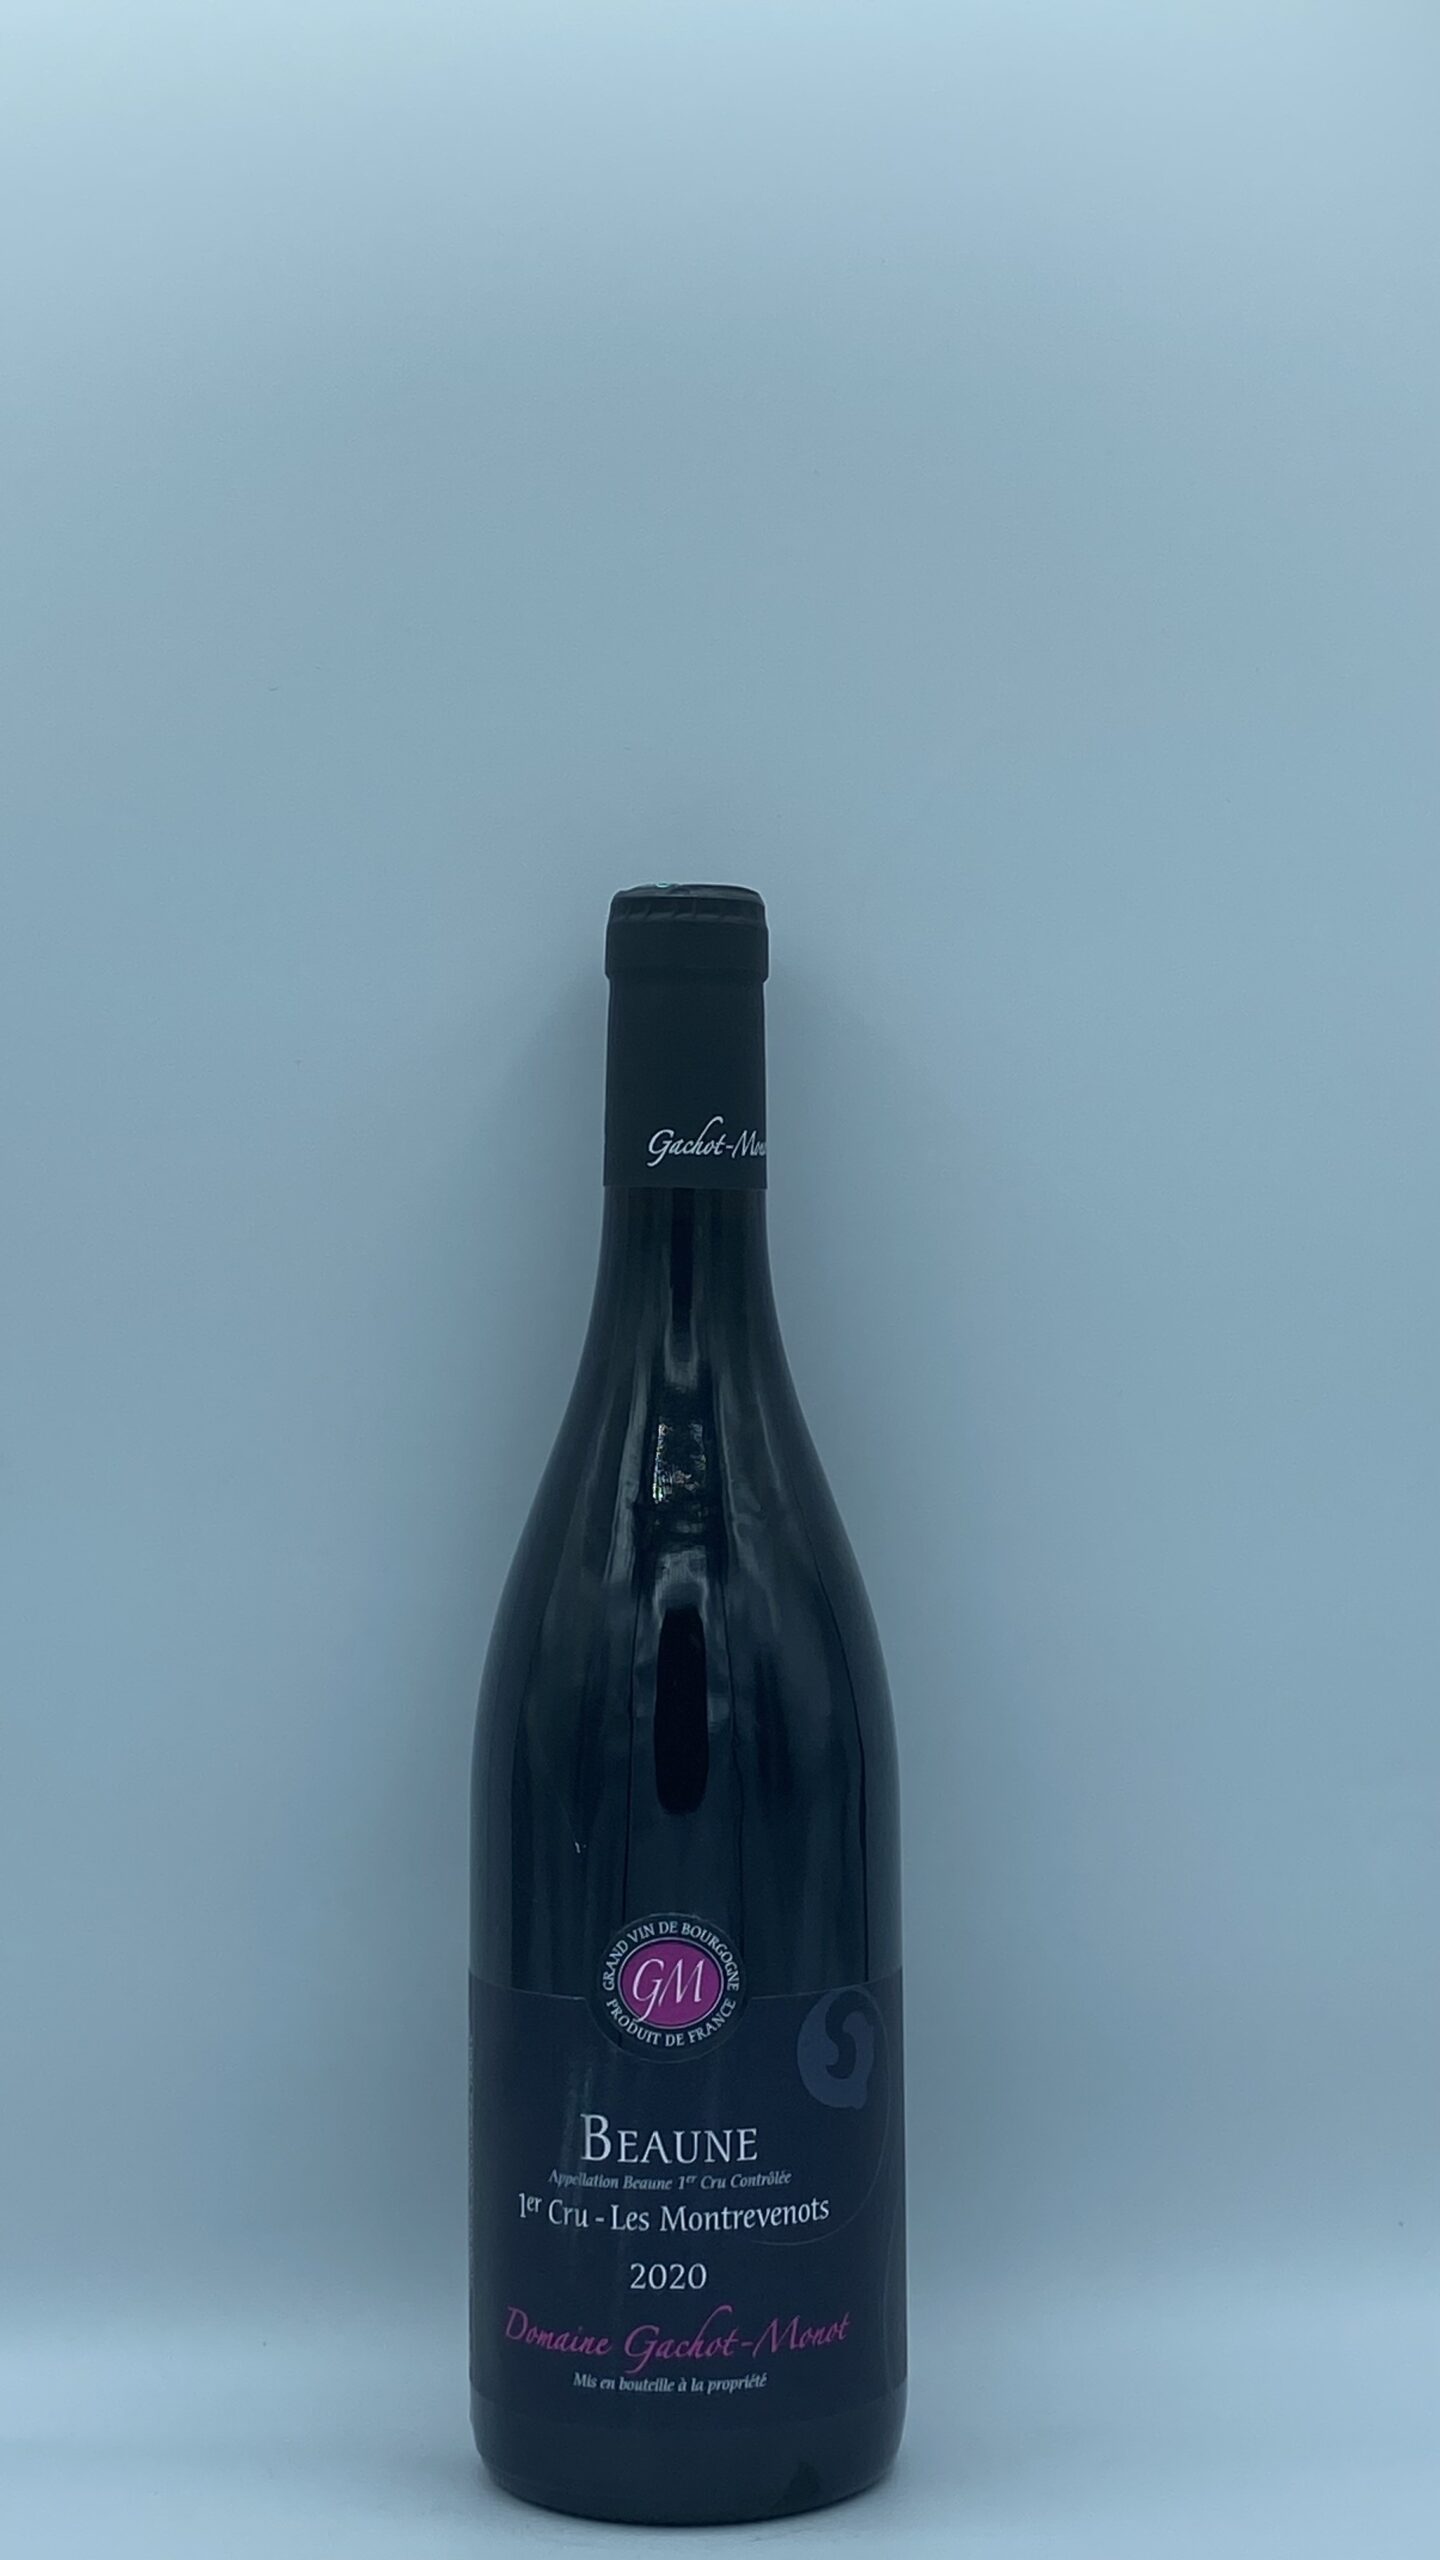 Bourgogne Beaune 1er cru “Les Montrevenots” 2020 Domaine Gachot-Monot